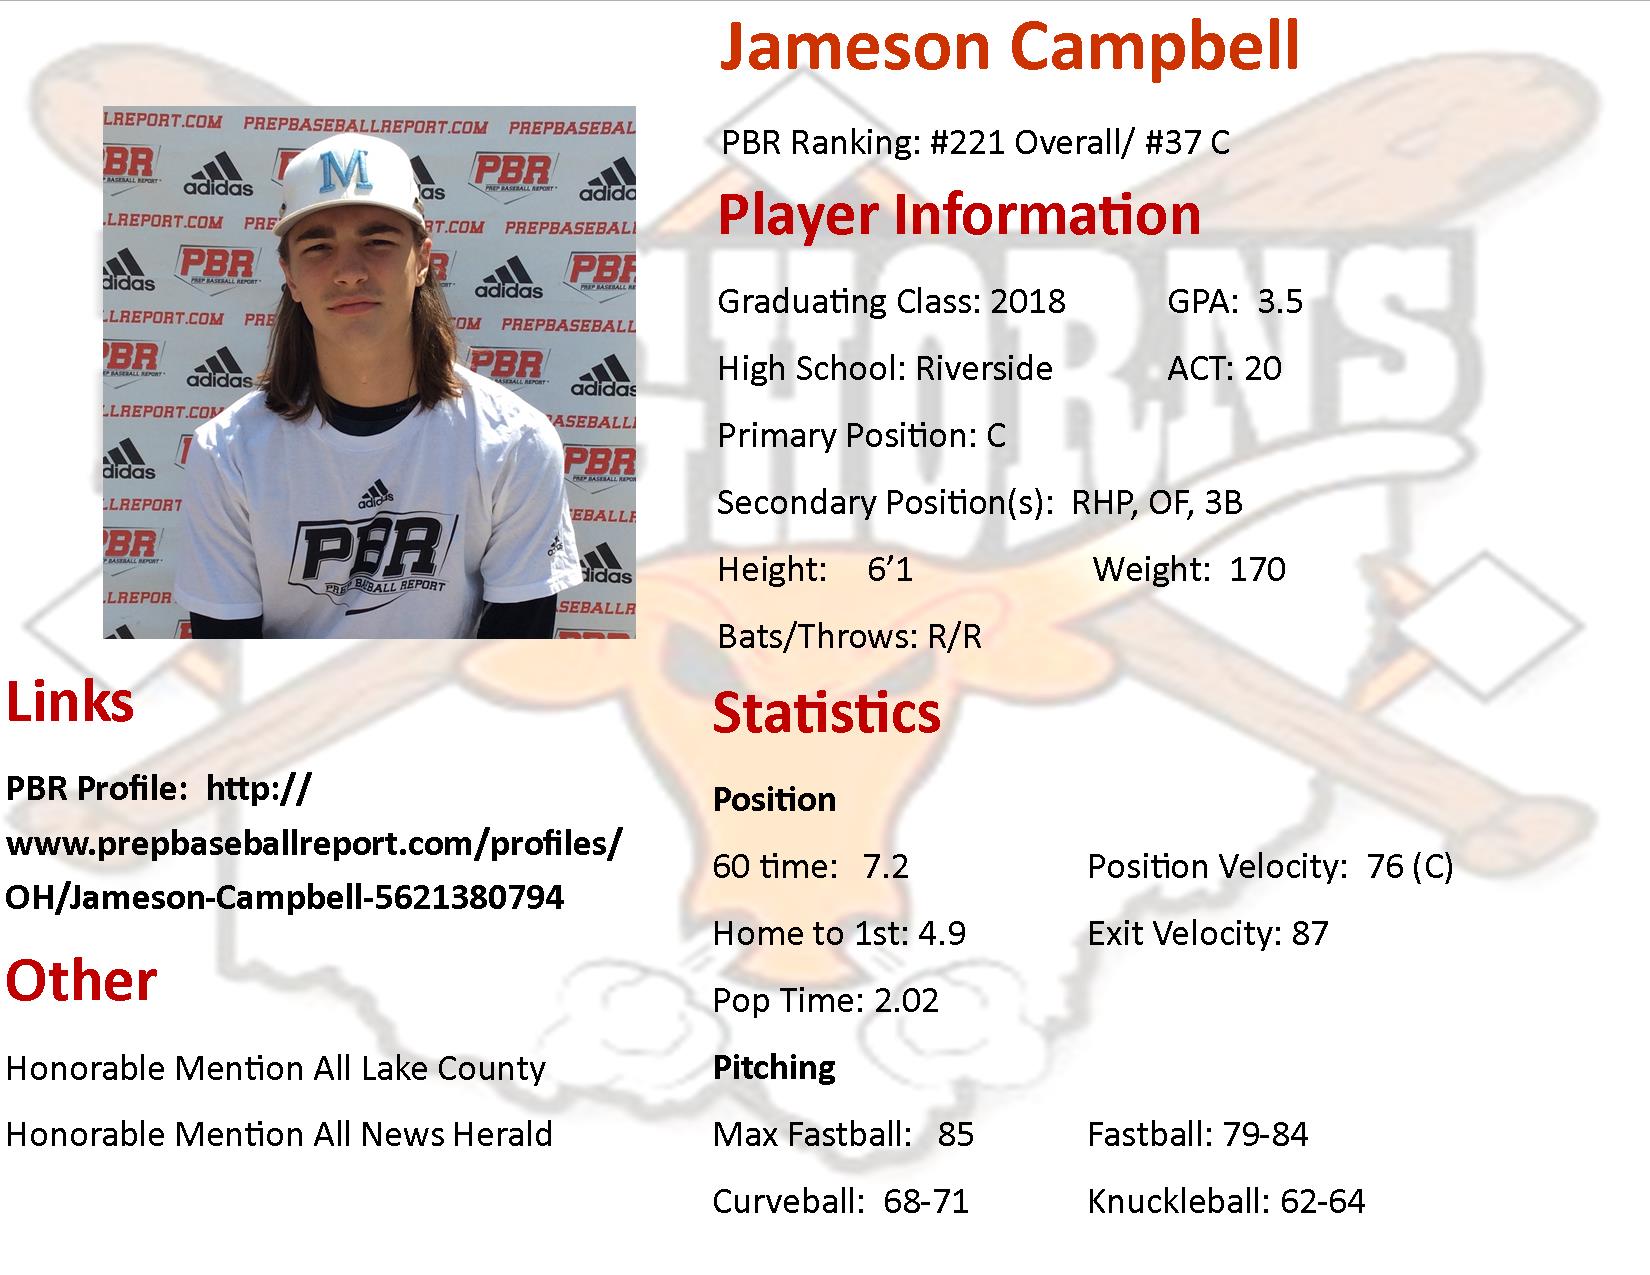 Jameson Campbell